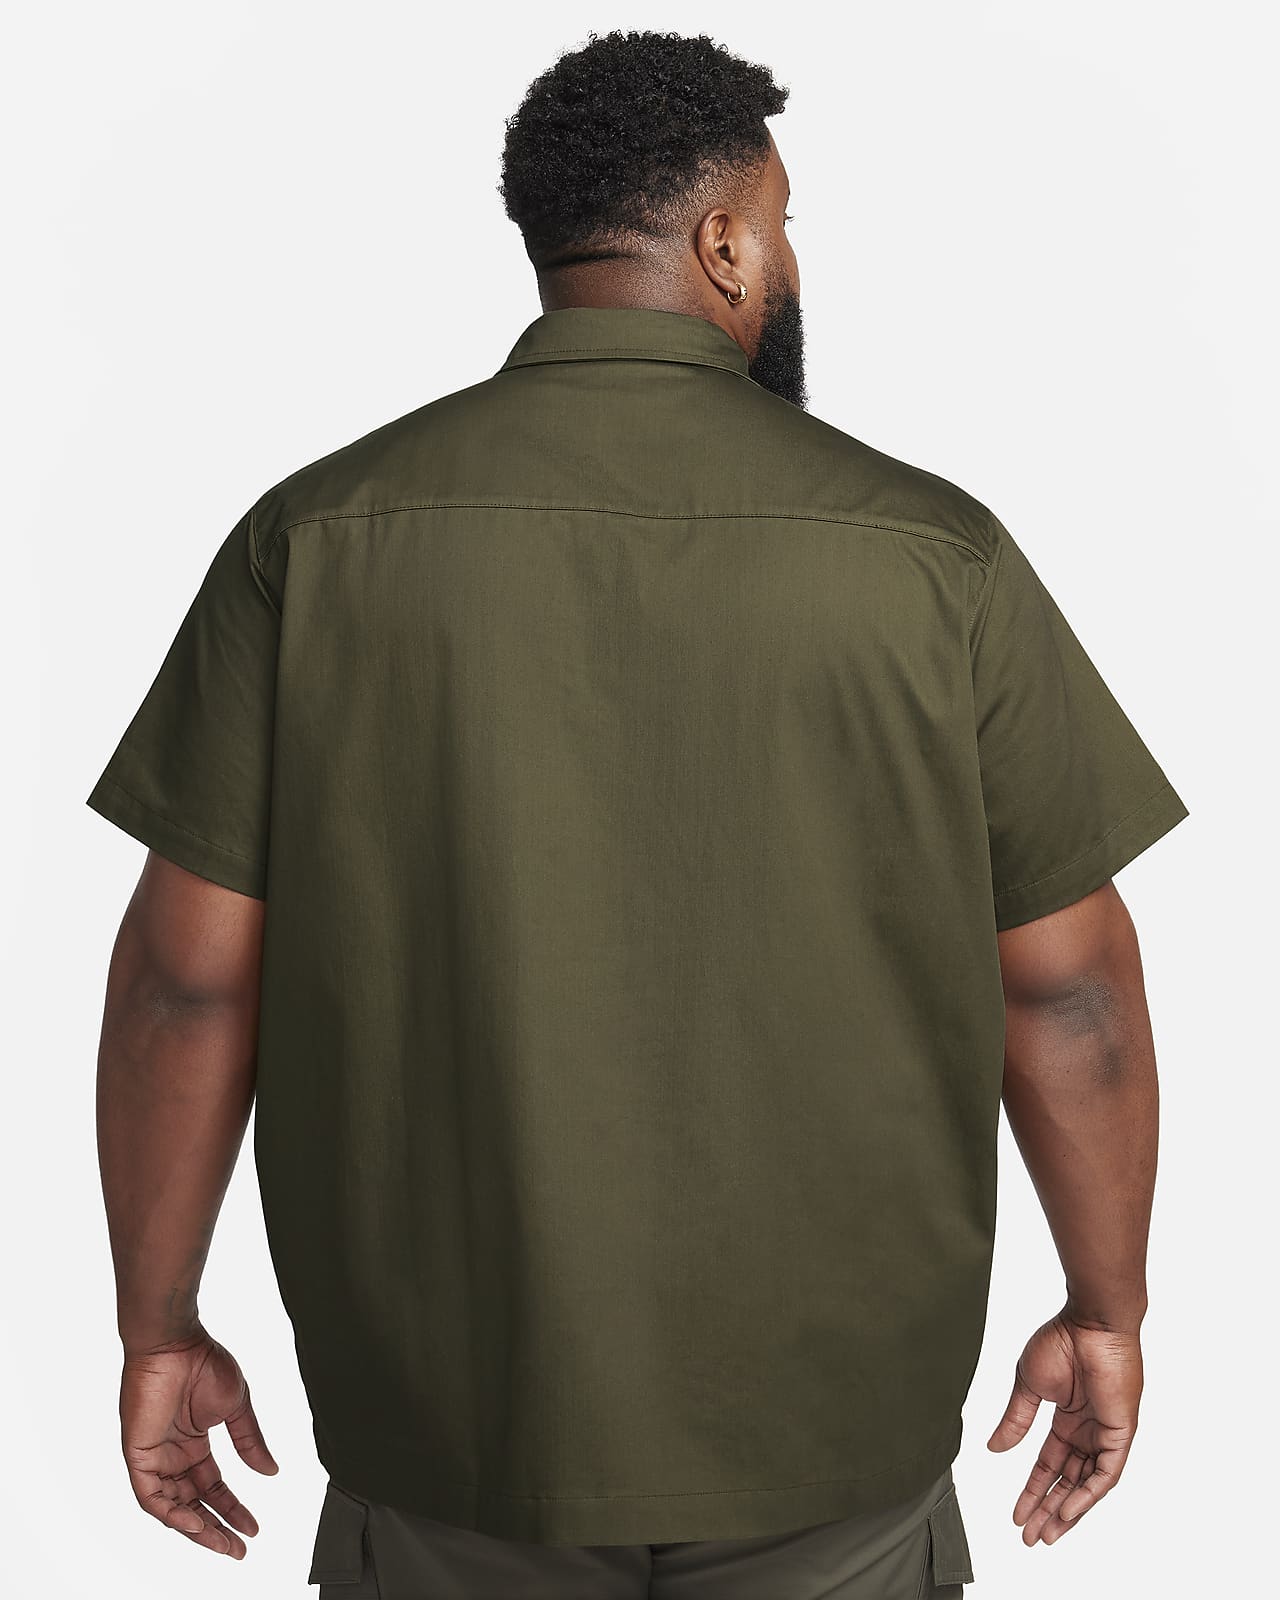 Nike Life Men's Woven Military Short-Sleeve Button-Down Shirt.